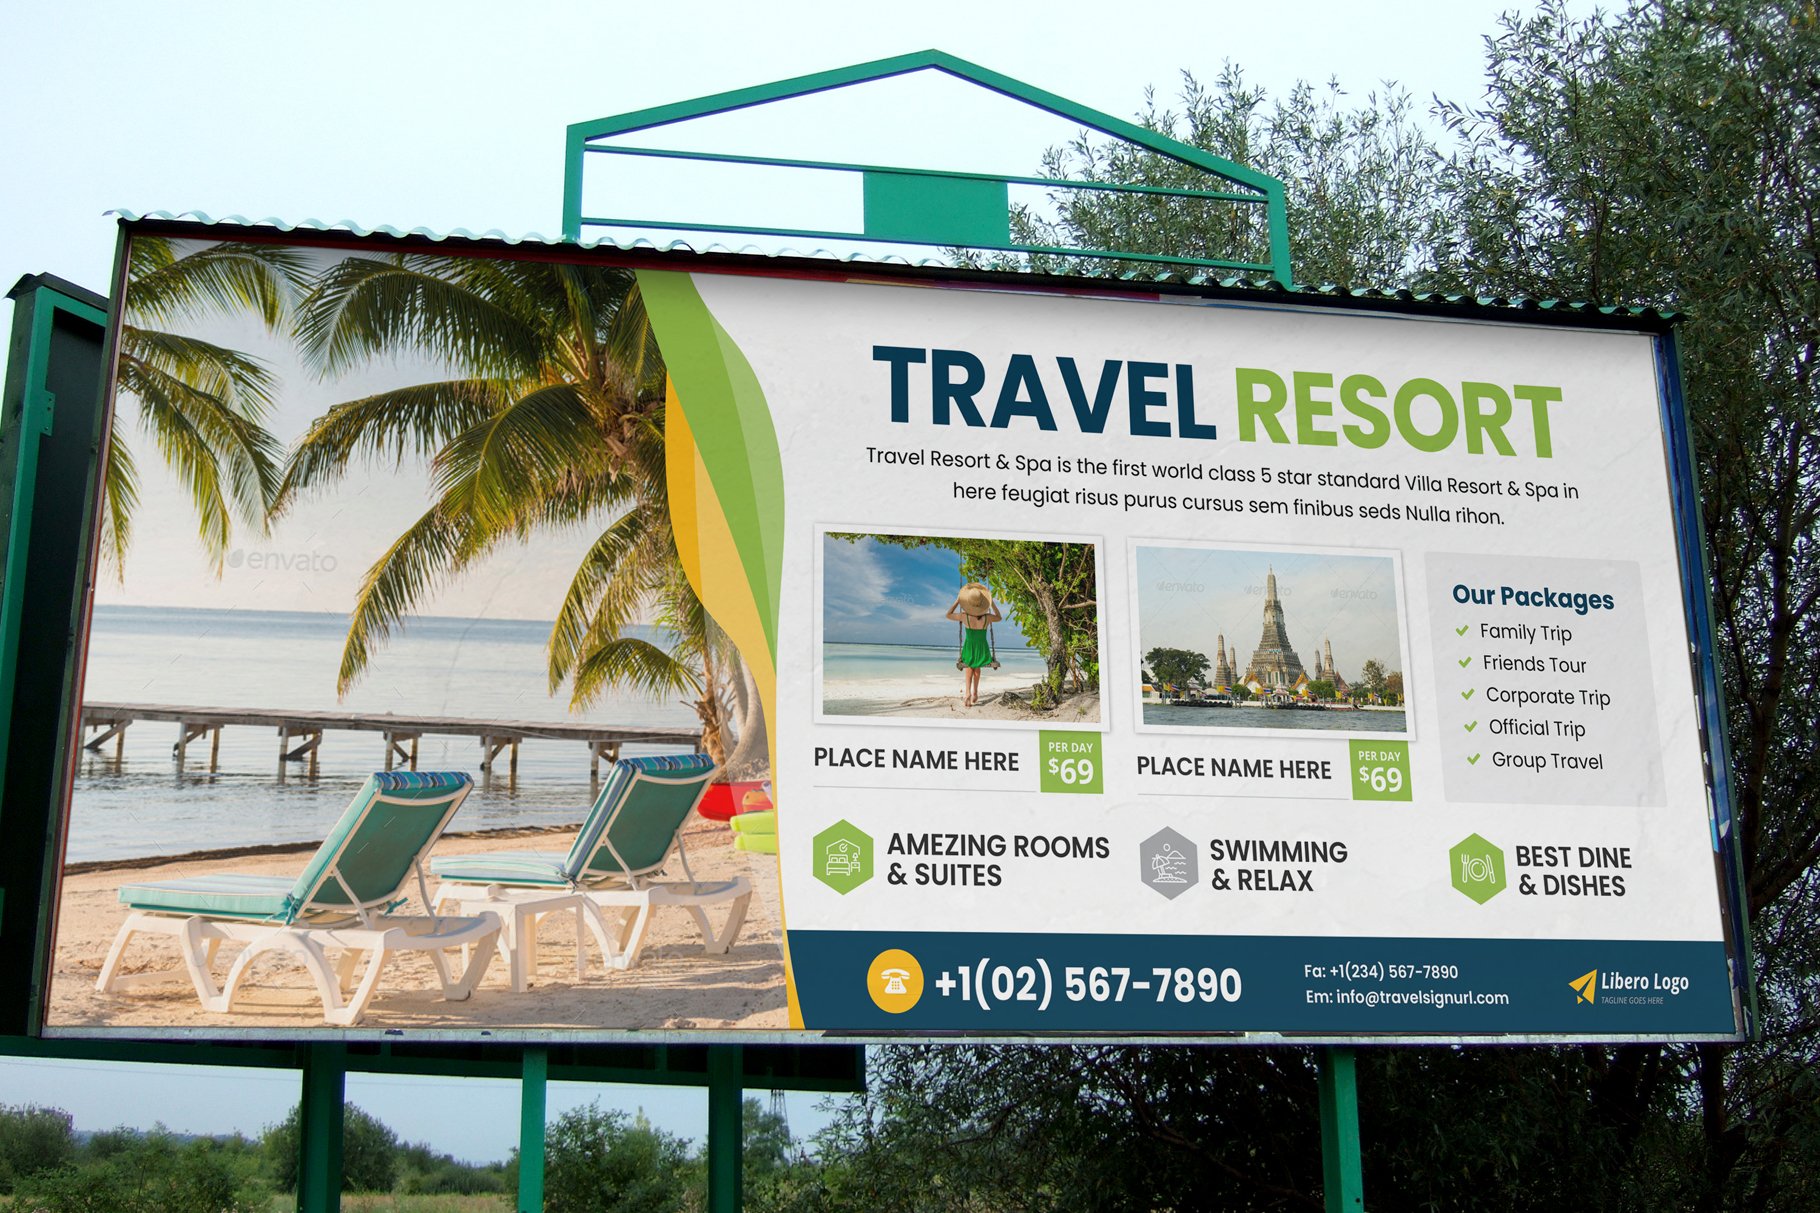 Holiday Travel Billboard Signage v2 preview image.